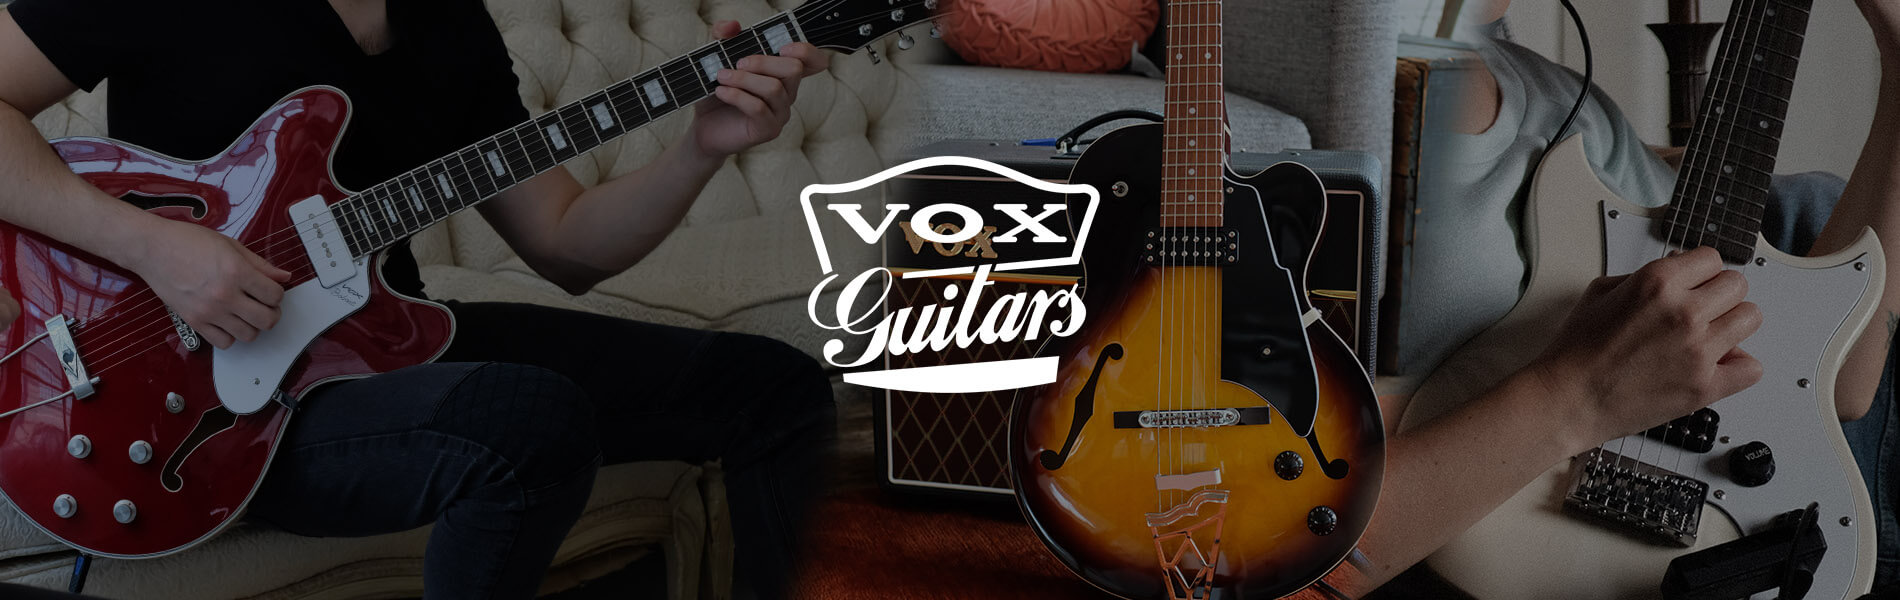 See VOX guitars